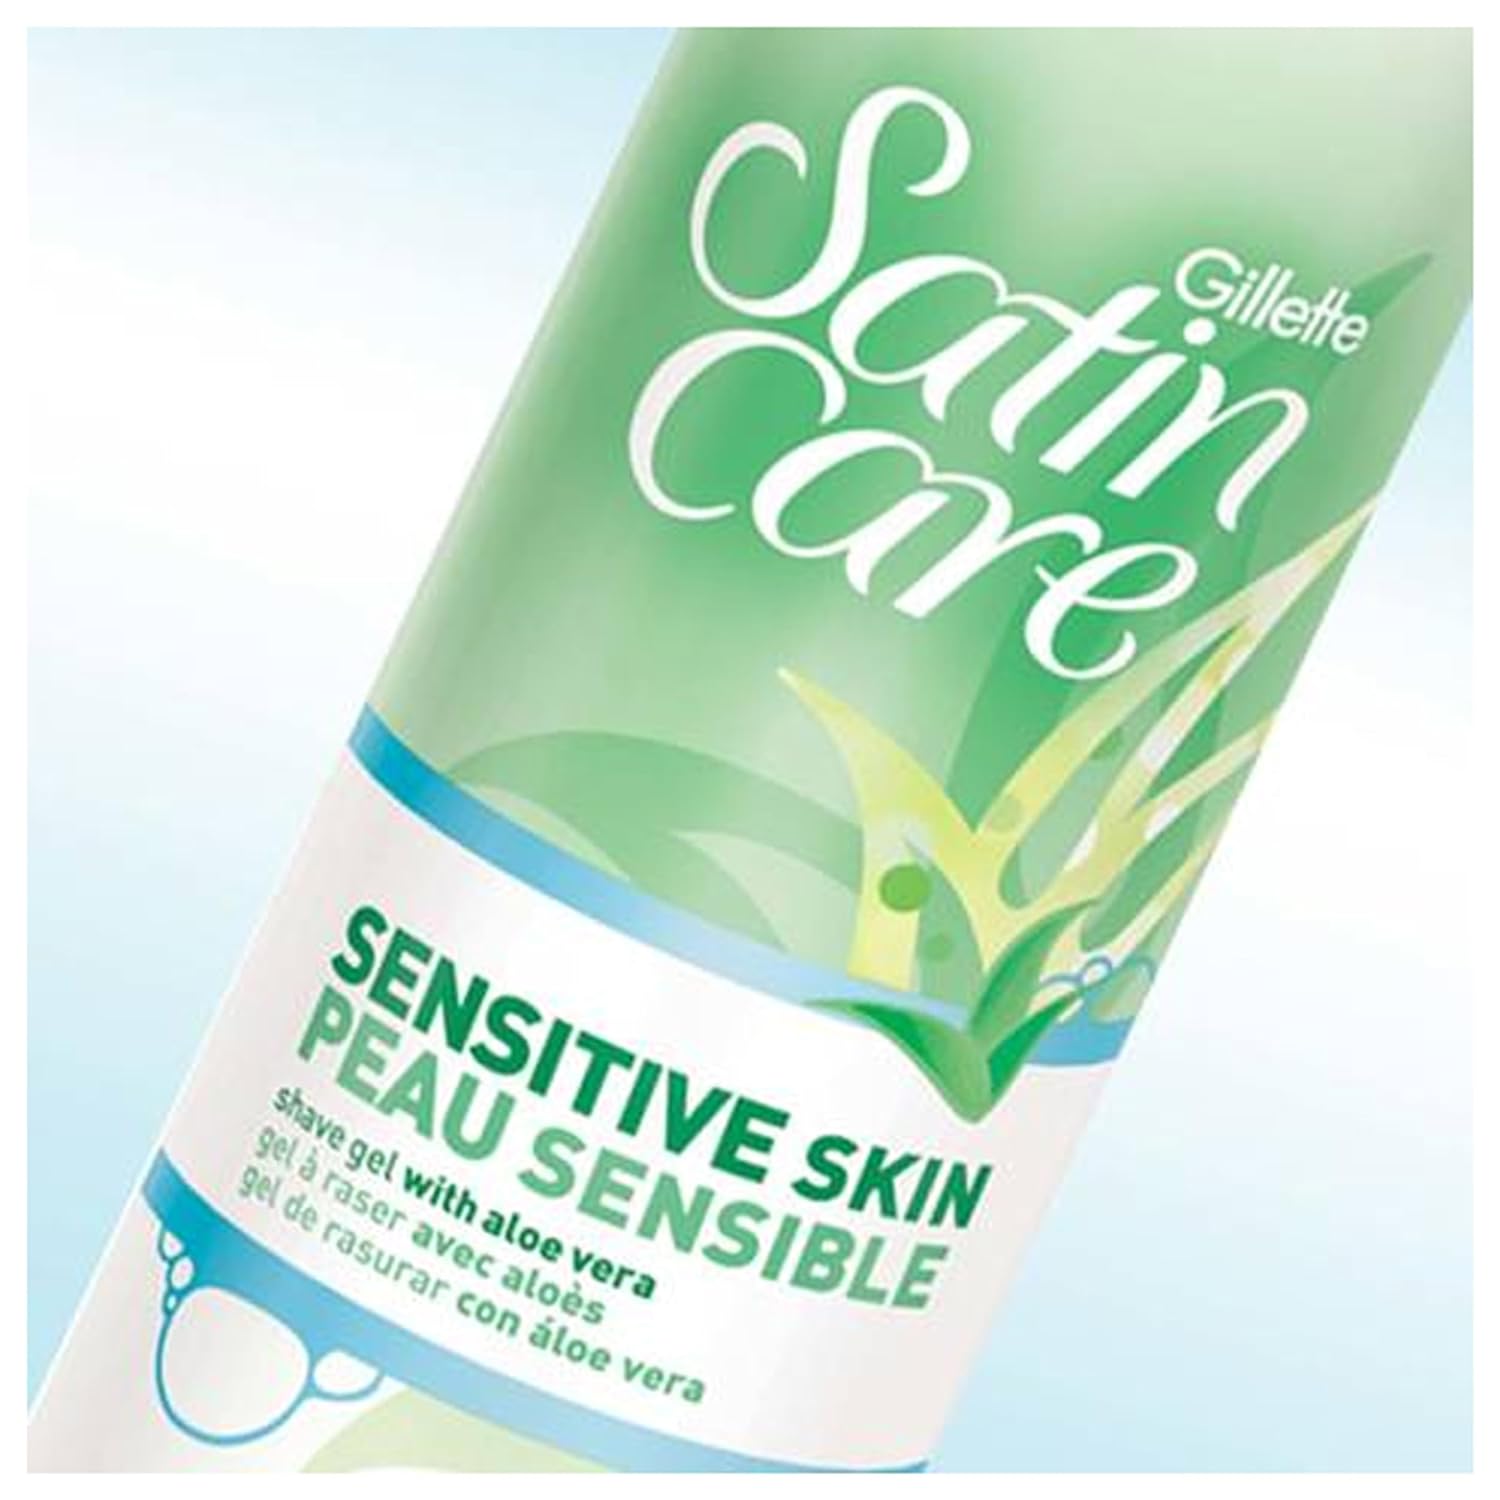 Gillette Venus Satin Care Sensitive Skin Shave Gel for Women 7 ounce, 2 count : Beauty & Personal Care